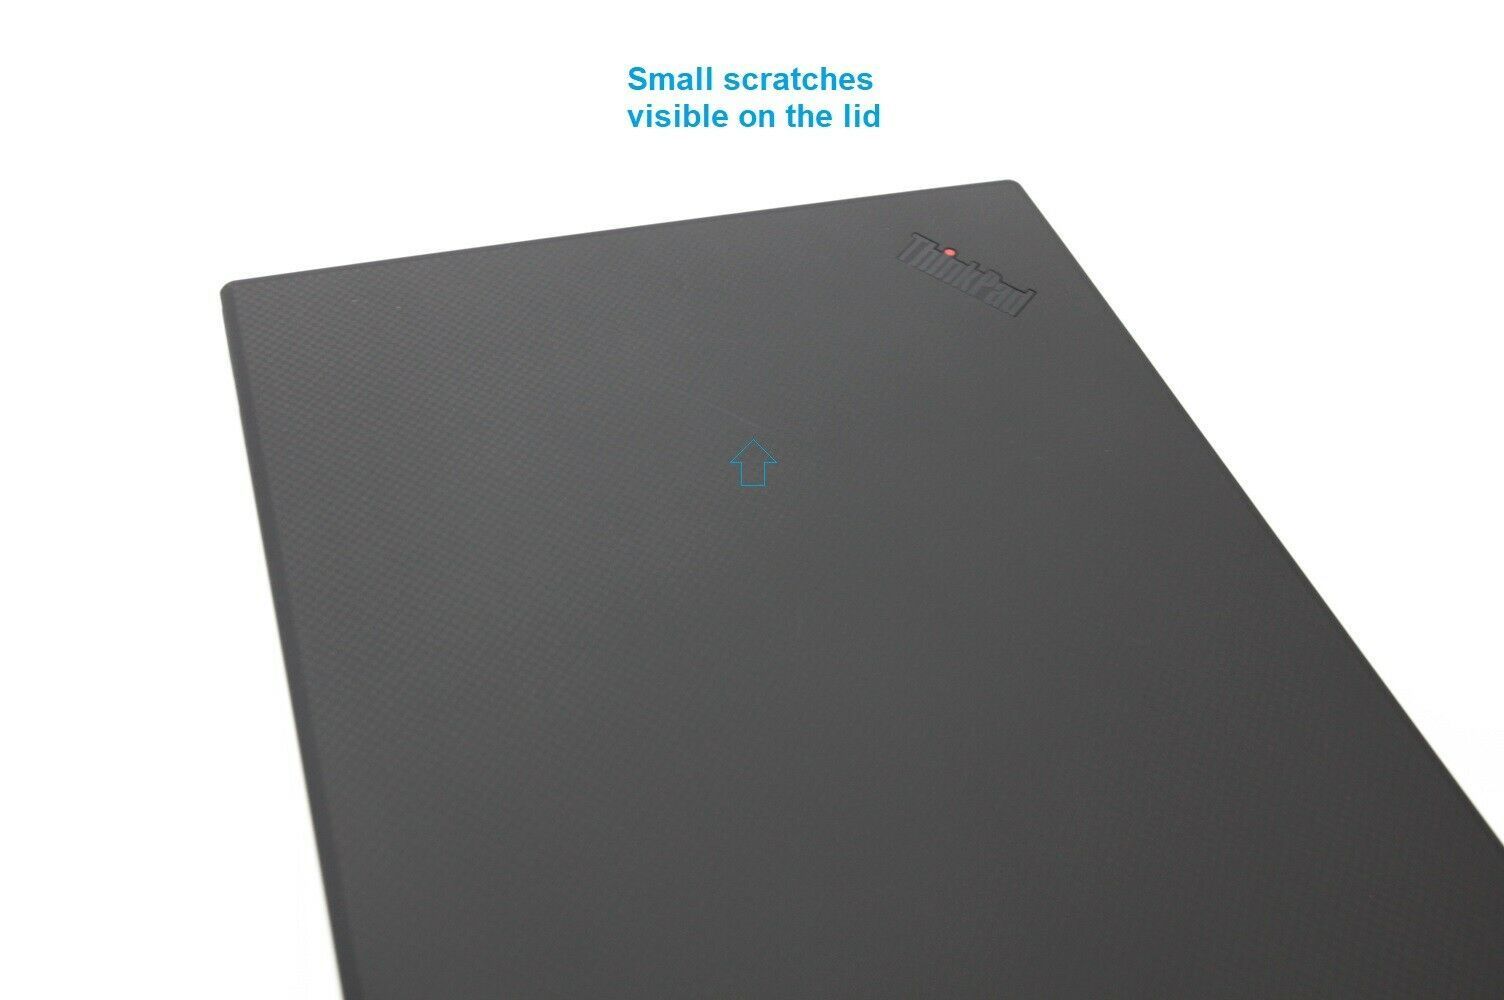 Lenovo ThinkPad X1 Carbon 7th Gen 2019 Laptop: 4K, Core i7, 512GB, 16GB, VAT - CruiseTech